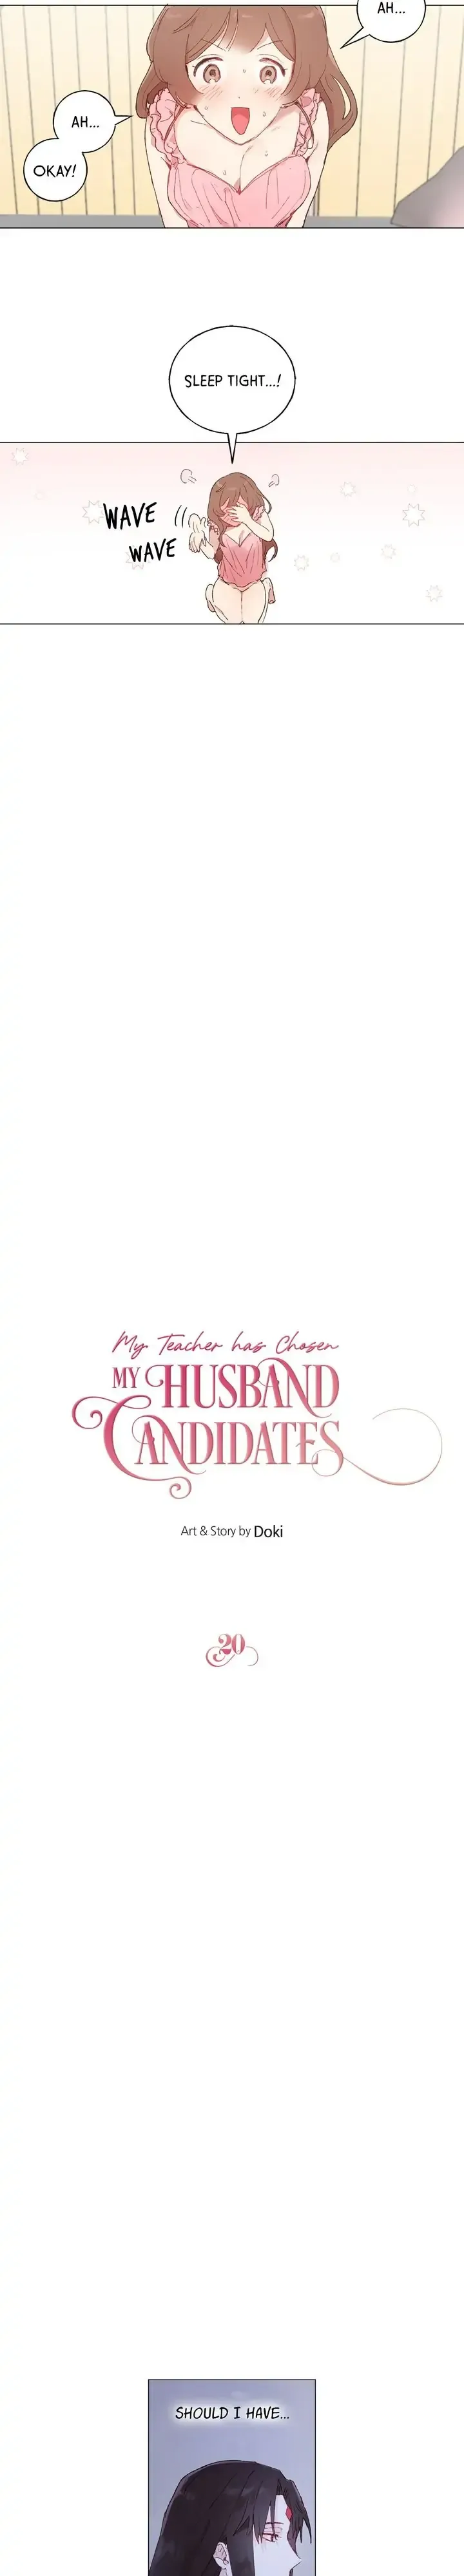 My Teacher Has Chosen My Husband Candidates - Page 3